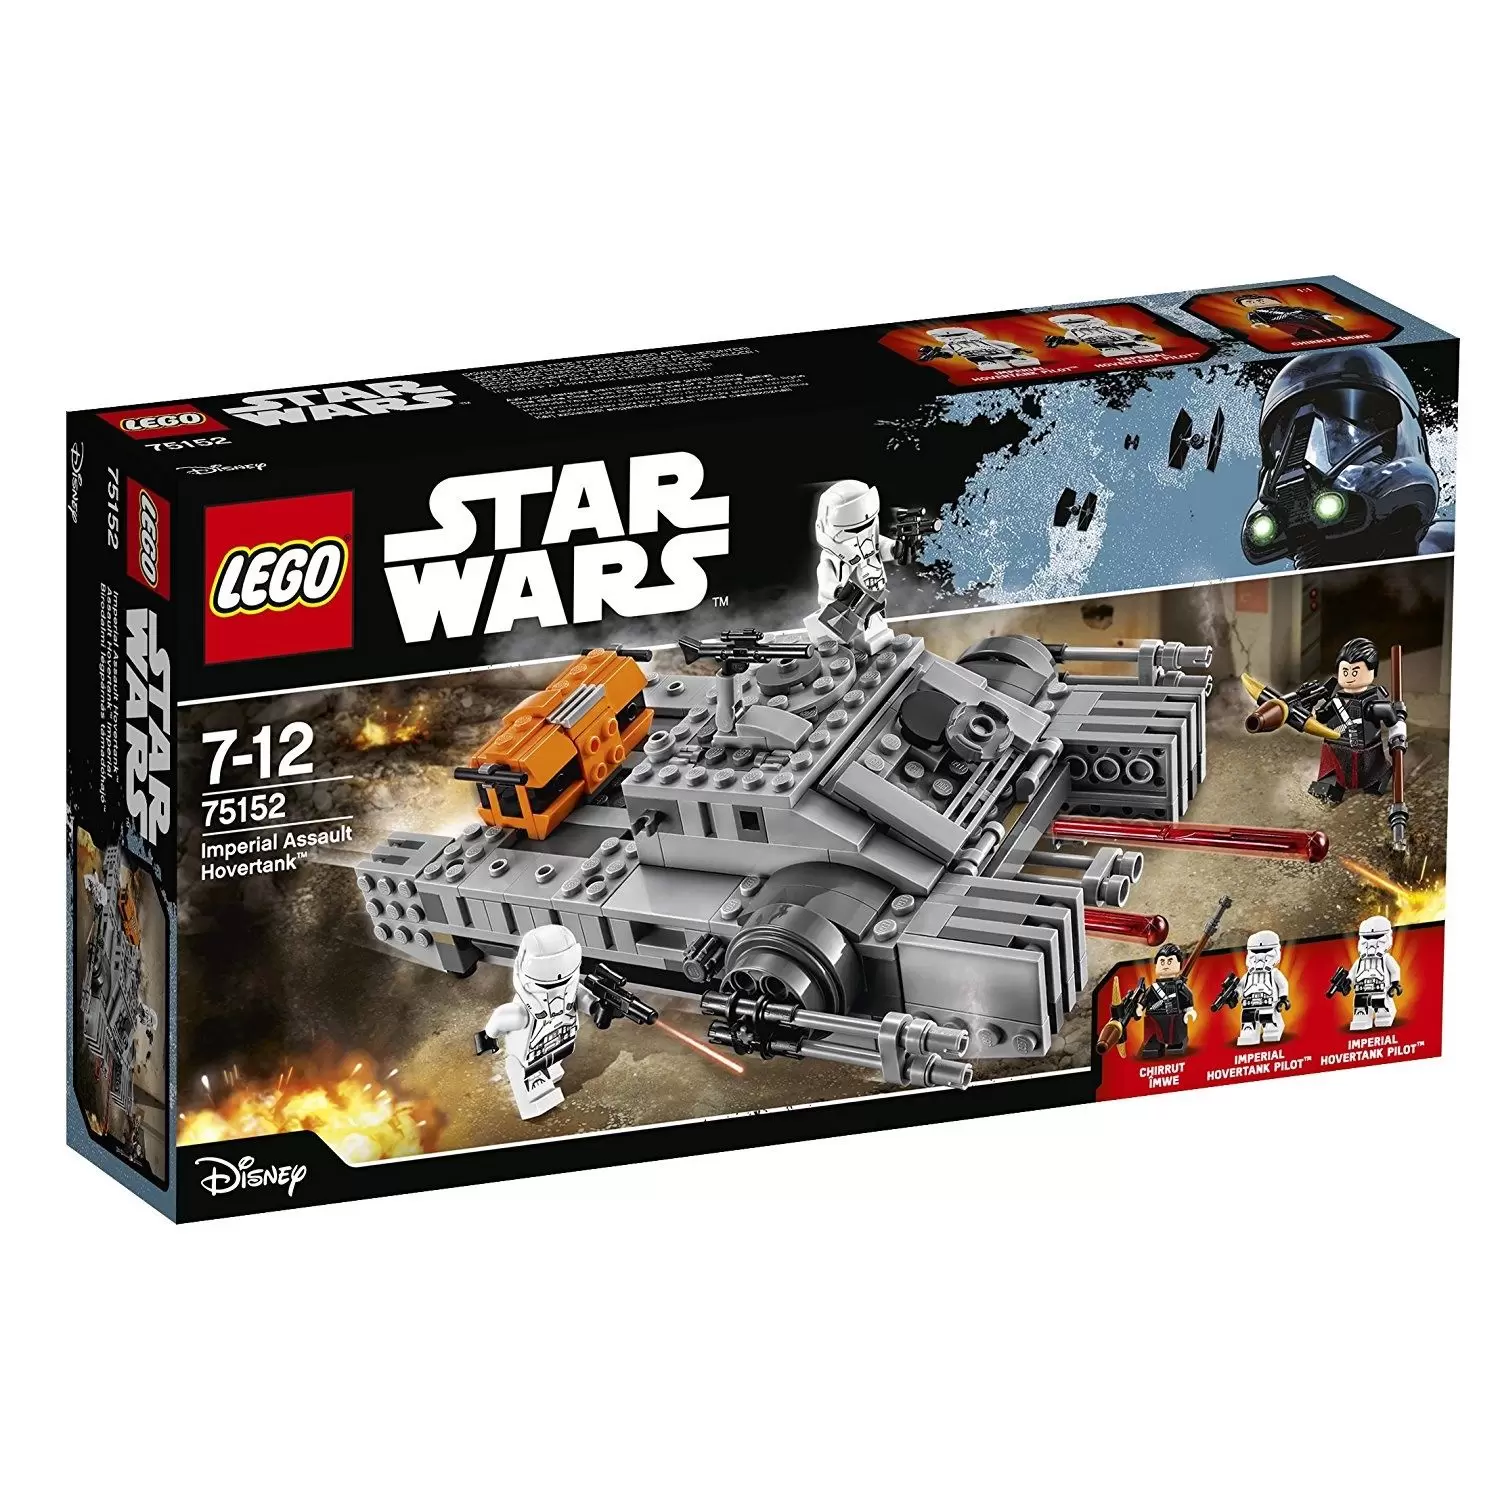 LEGO Star Wars - Imperial Assault Hovertank